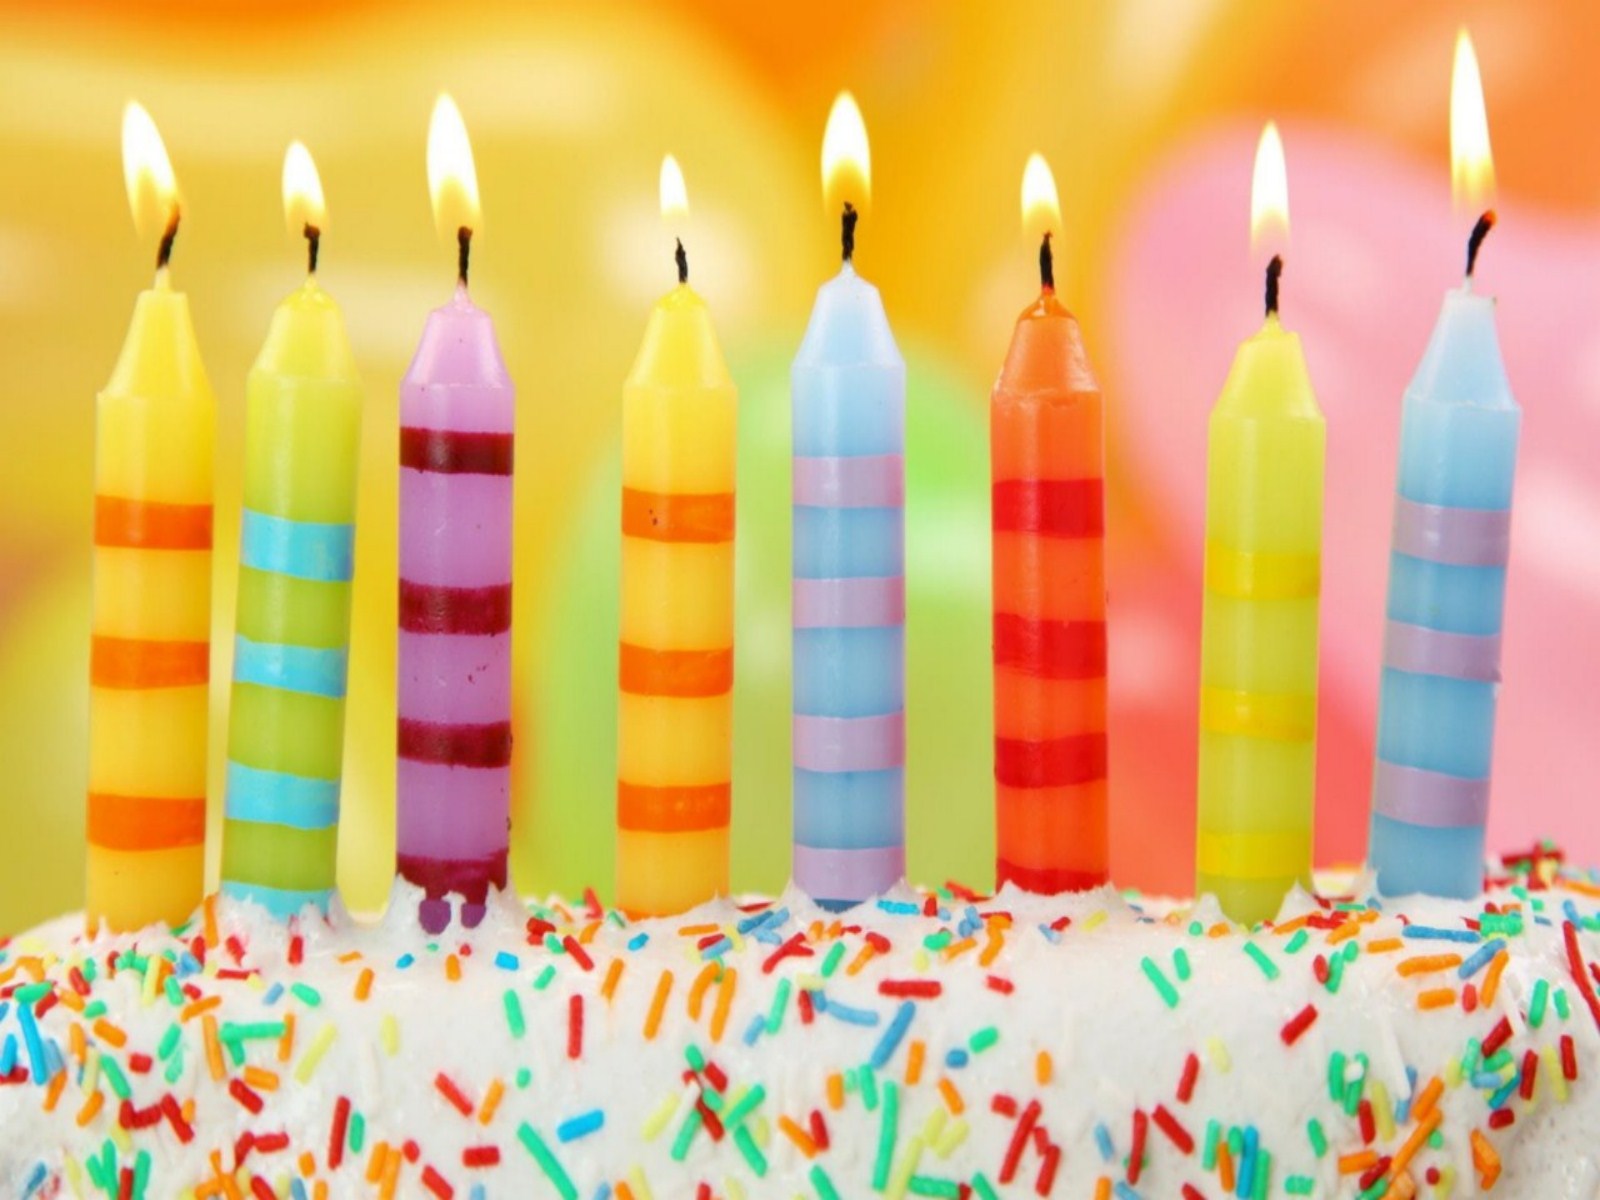 Candles on a birthday cake - Birthday